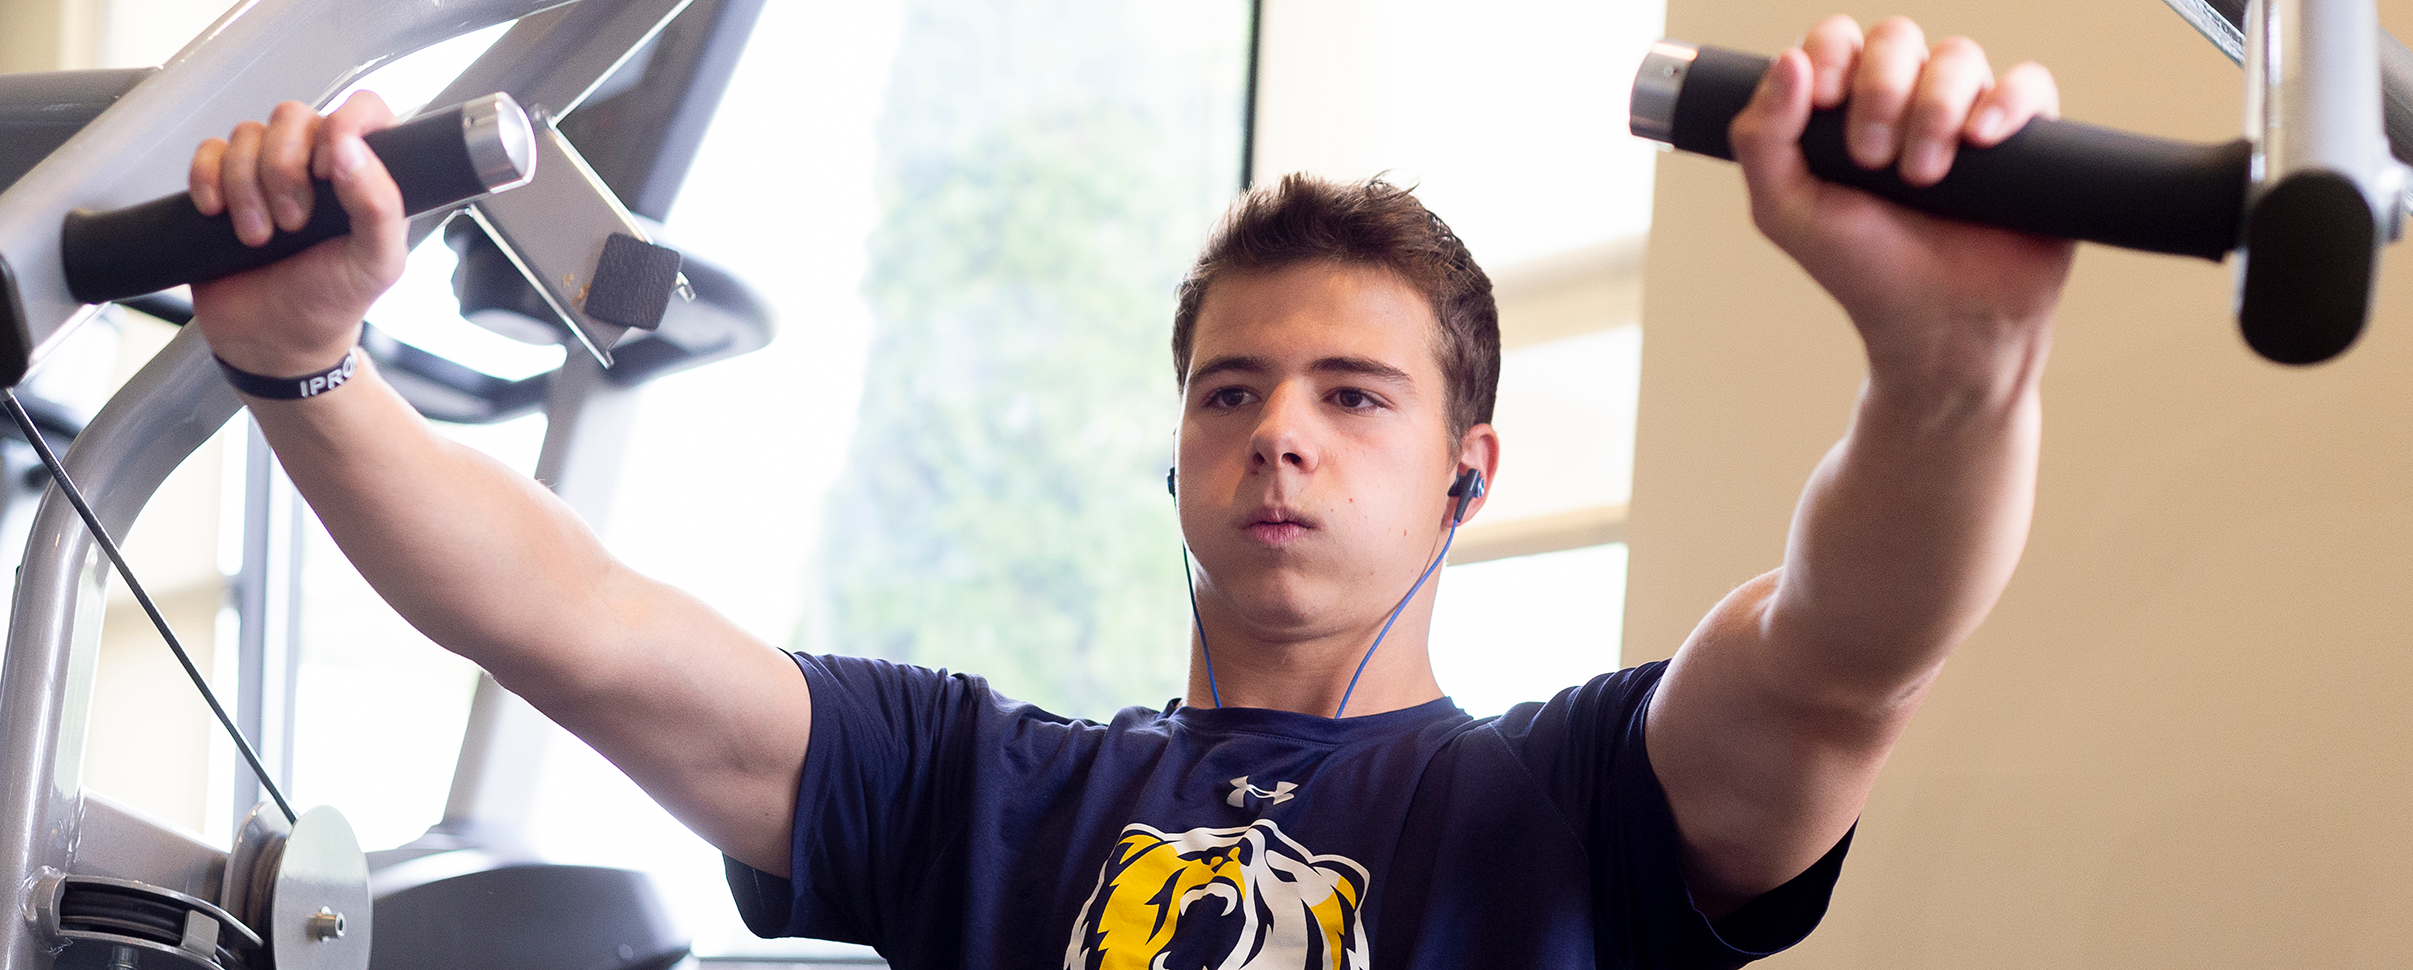 Student athlete using exercise equipment